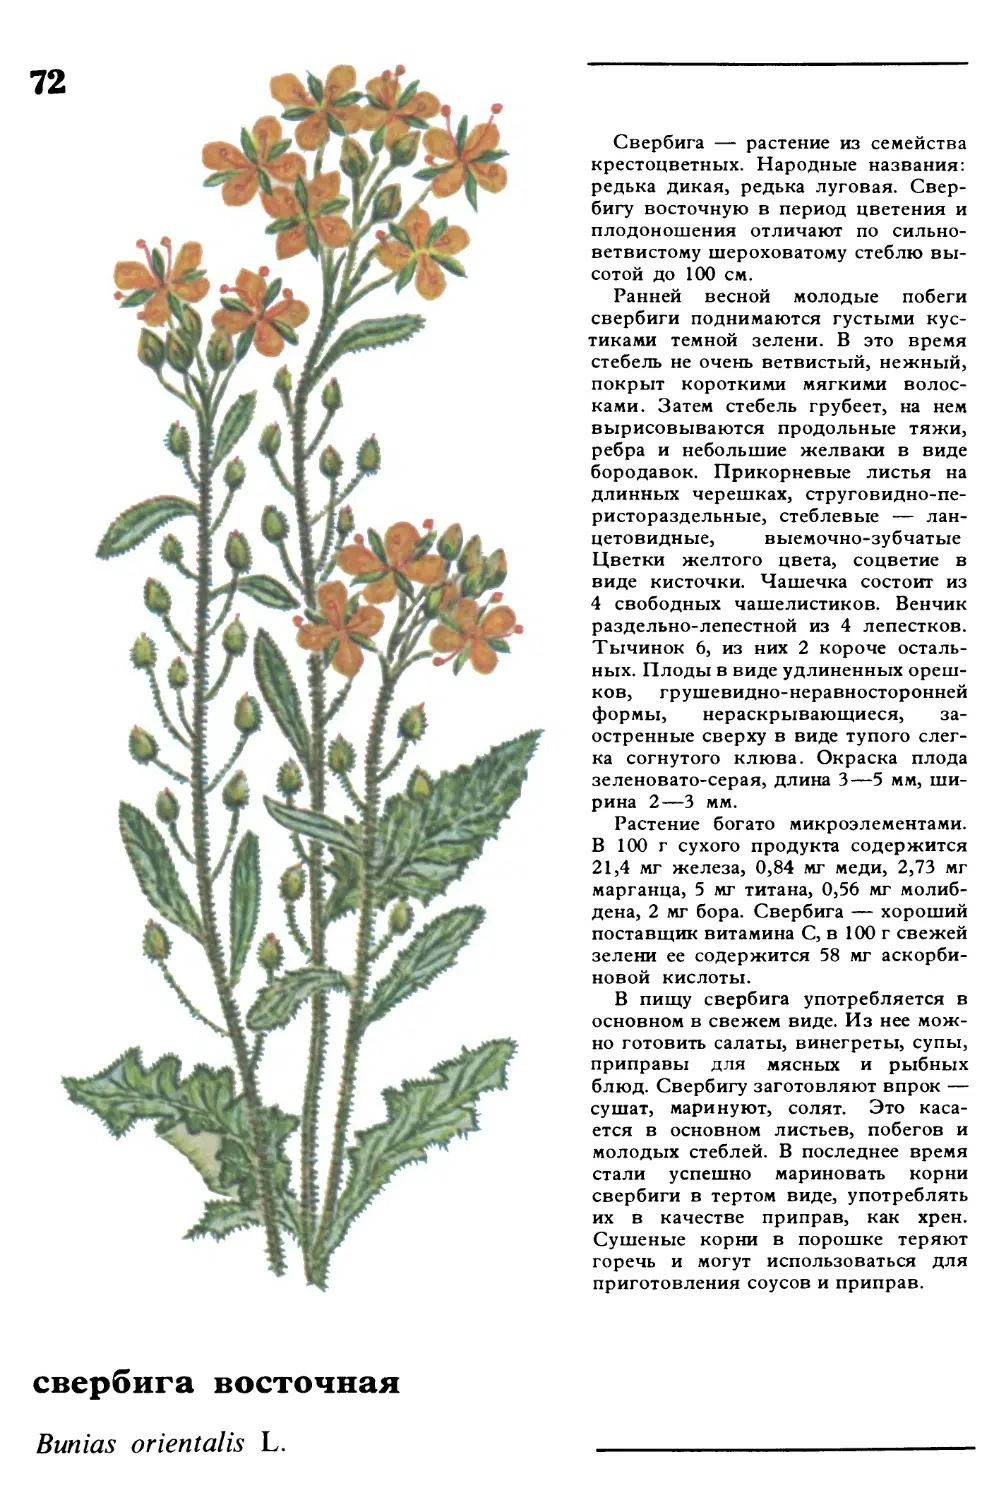 Свербига
свербига восточная
Bunias orientalis L.